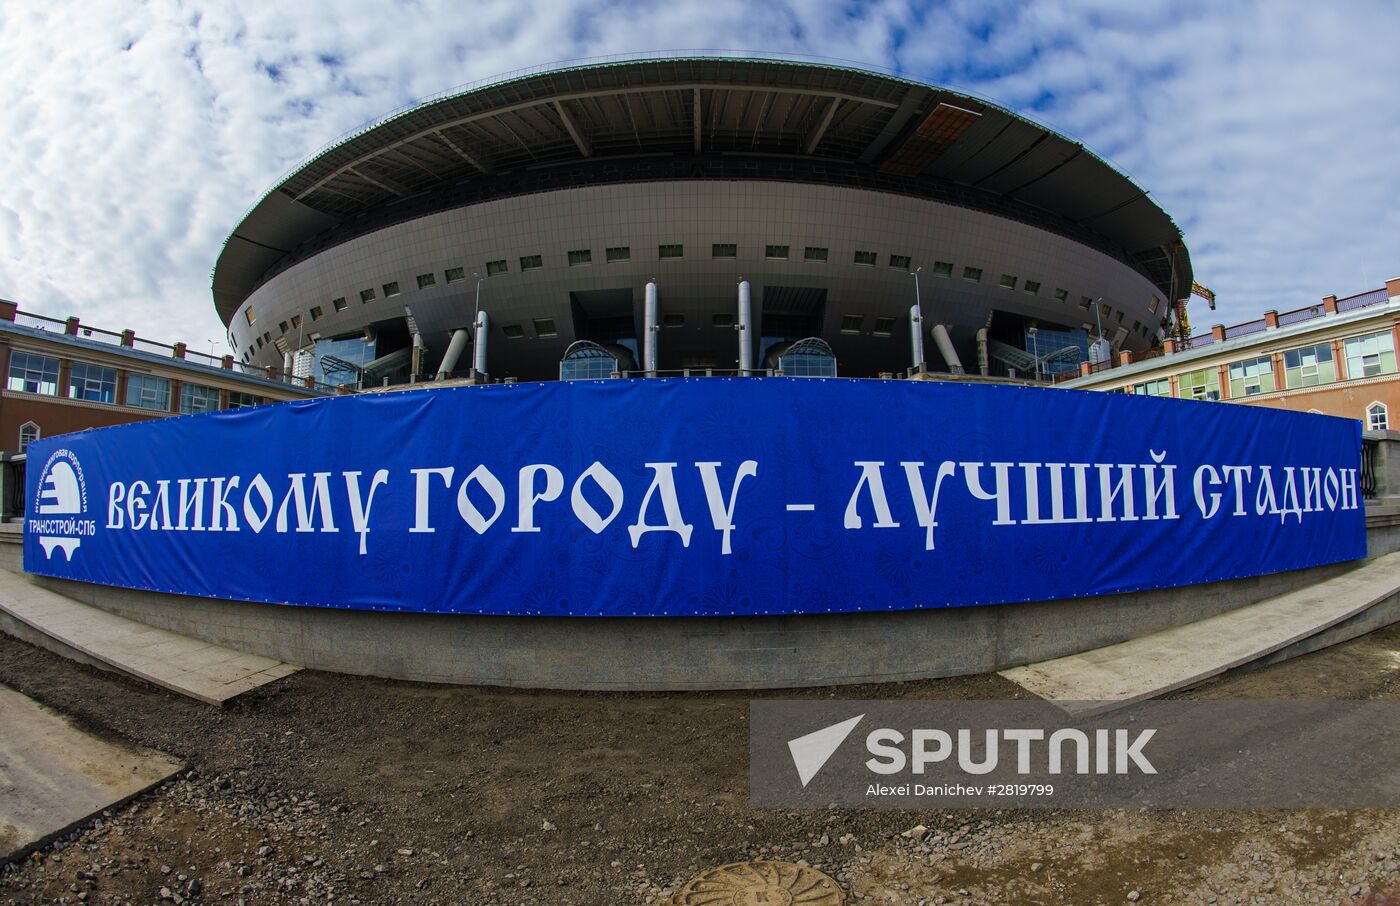 FIFA and Russia 2018 Organizing Committee visit Zenit-Arena Stadium